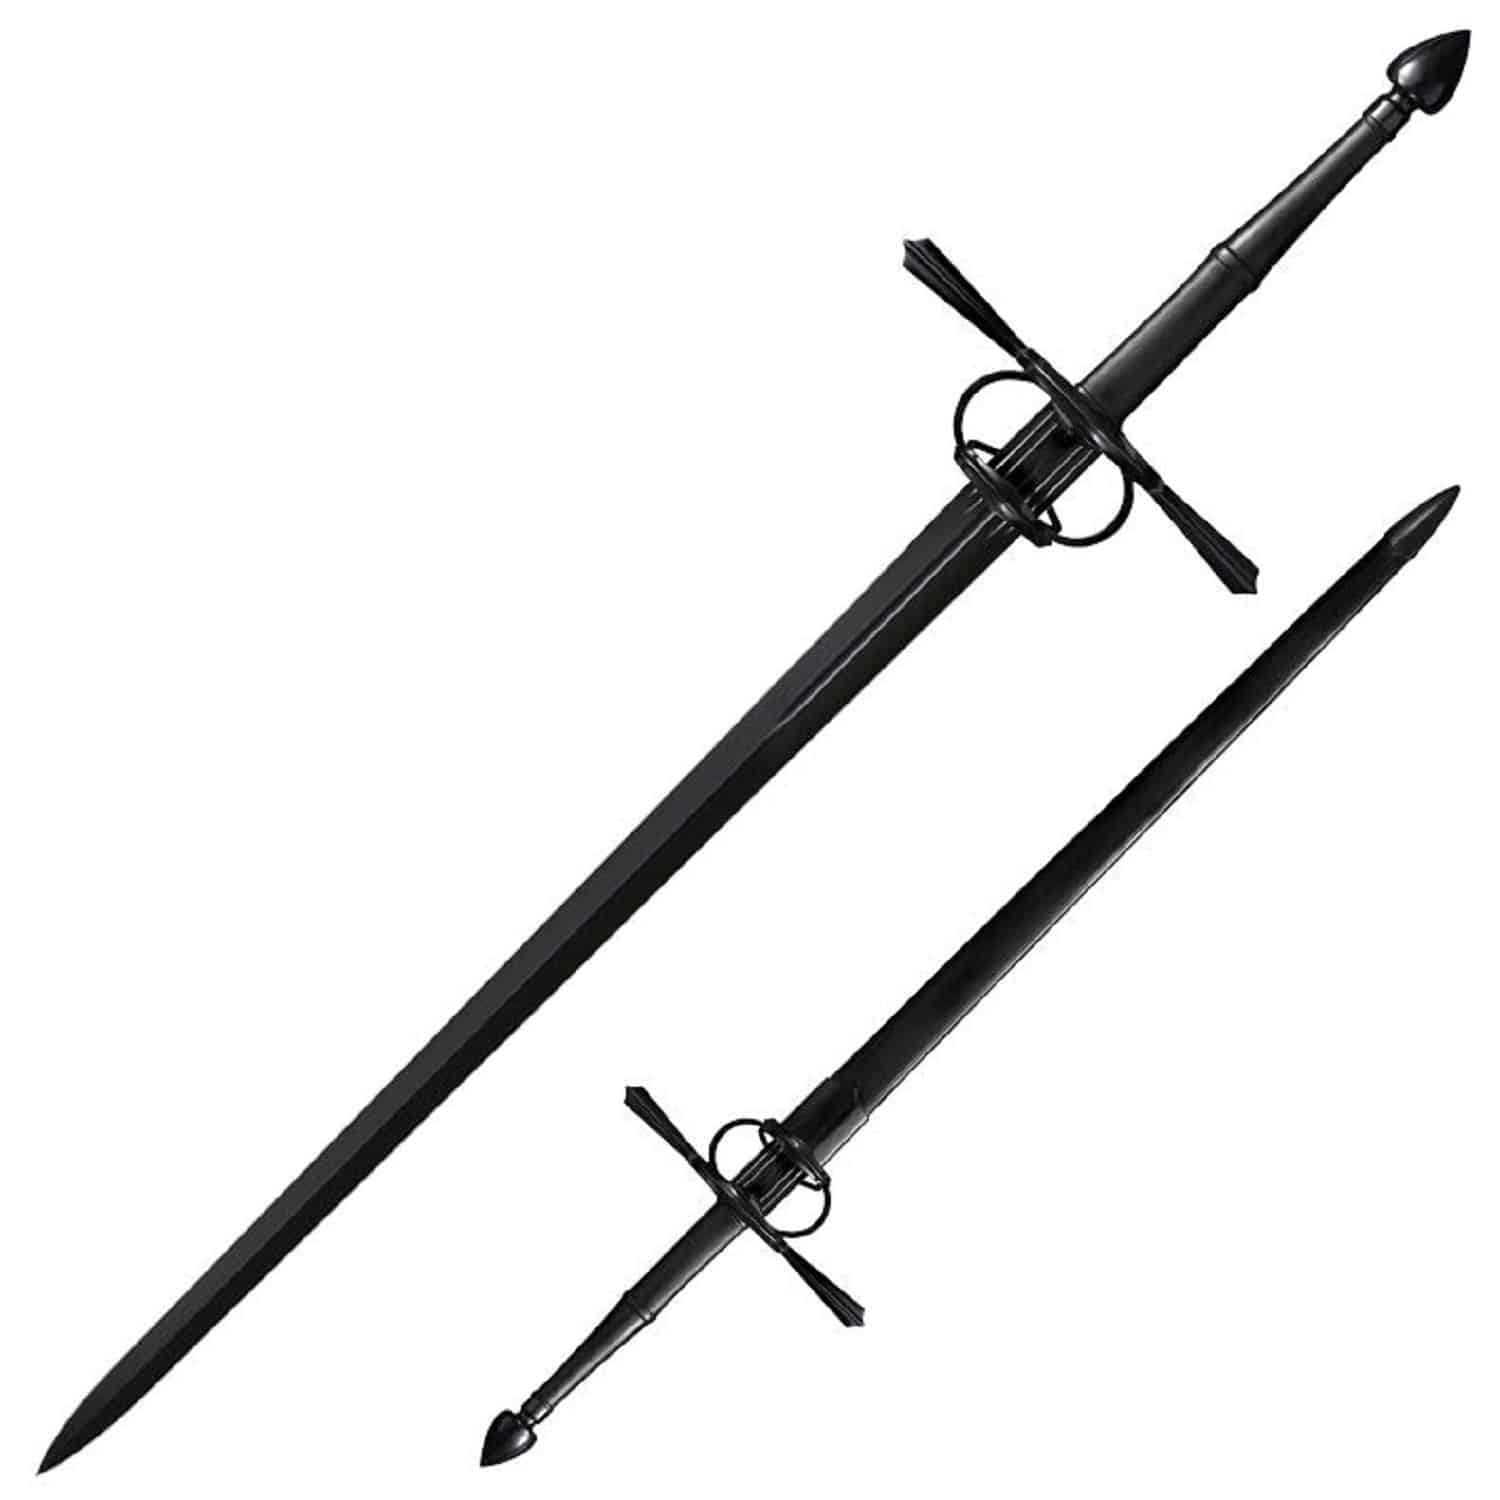 Zweihander sword